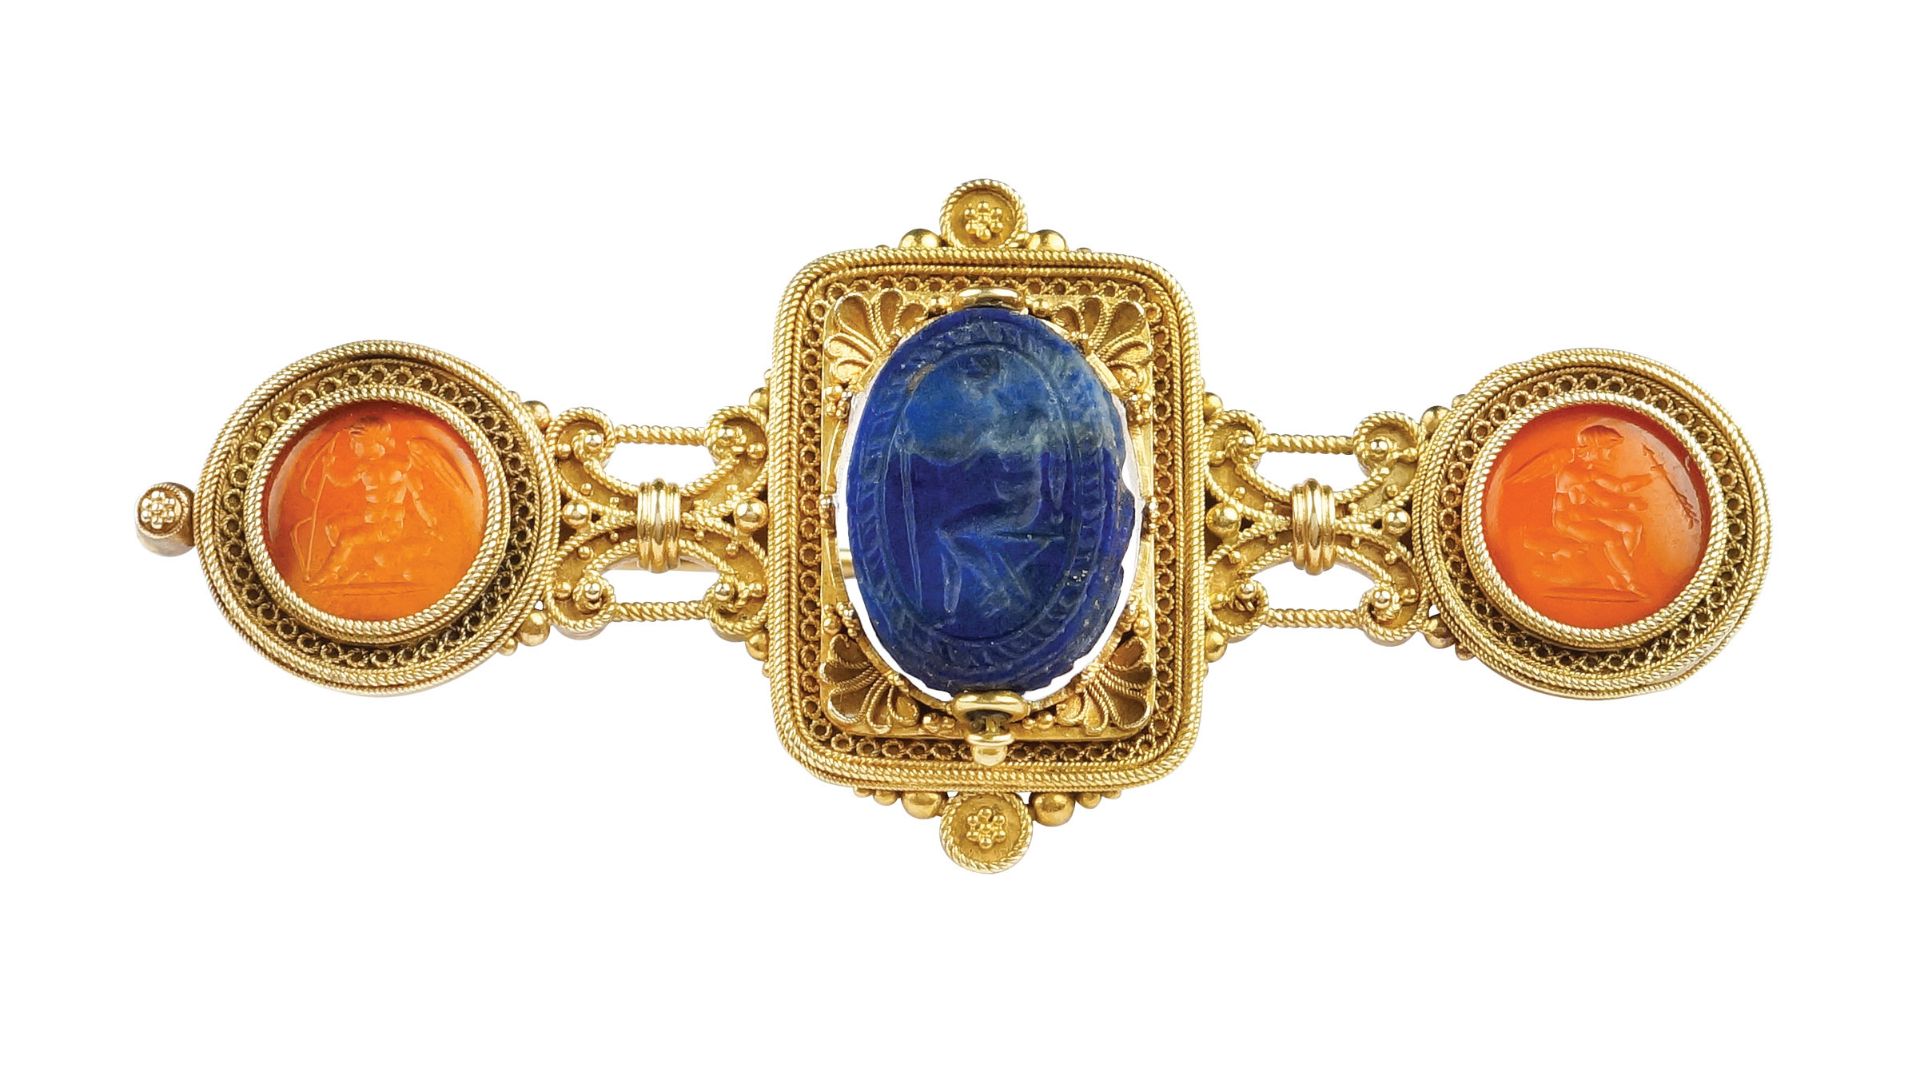 An Italian silver, gold, lapis lazuli and carnelian brooch